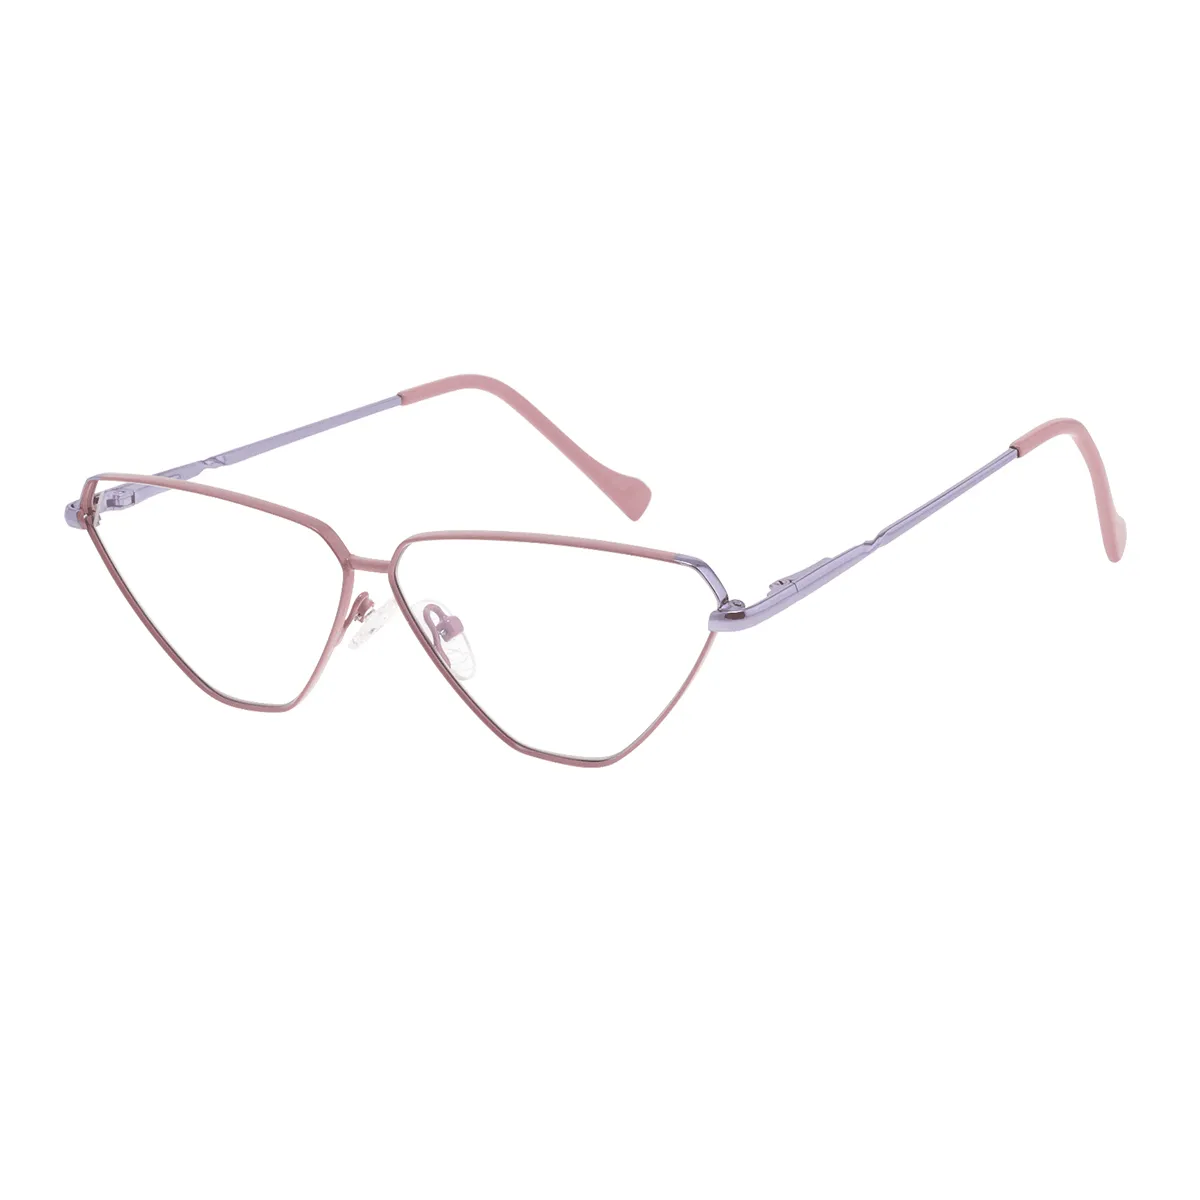 Mercer - Geometric Pink-purple Glasses for Women